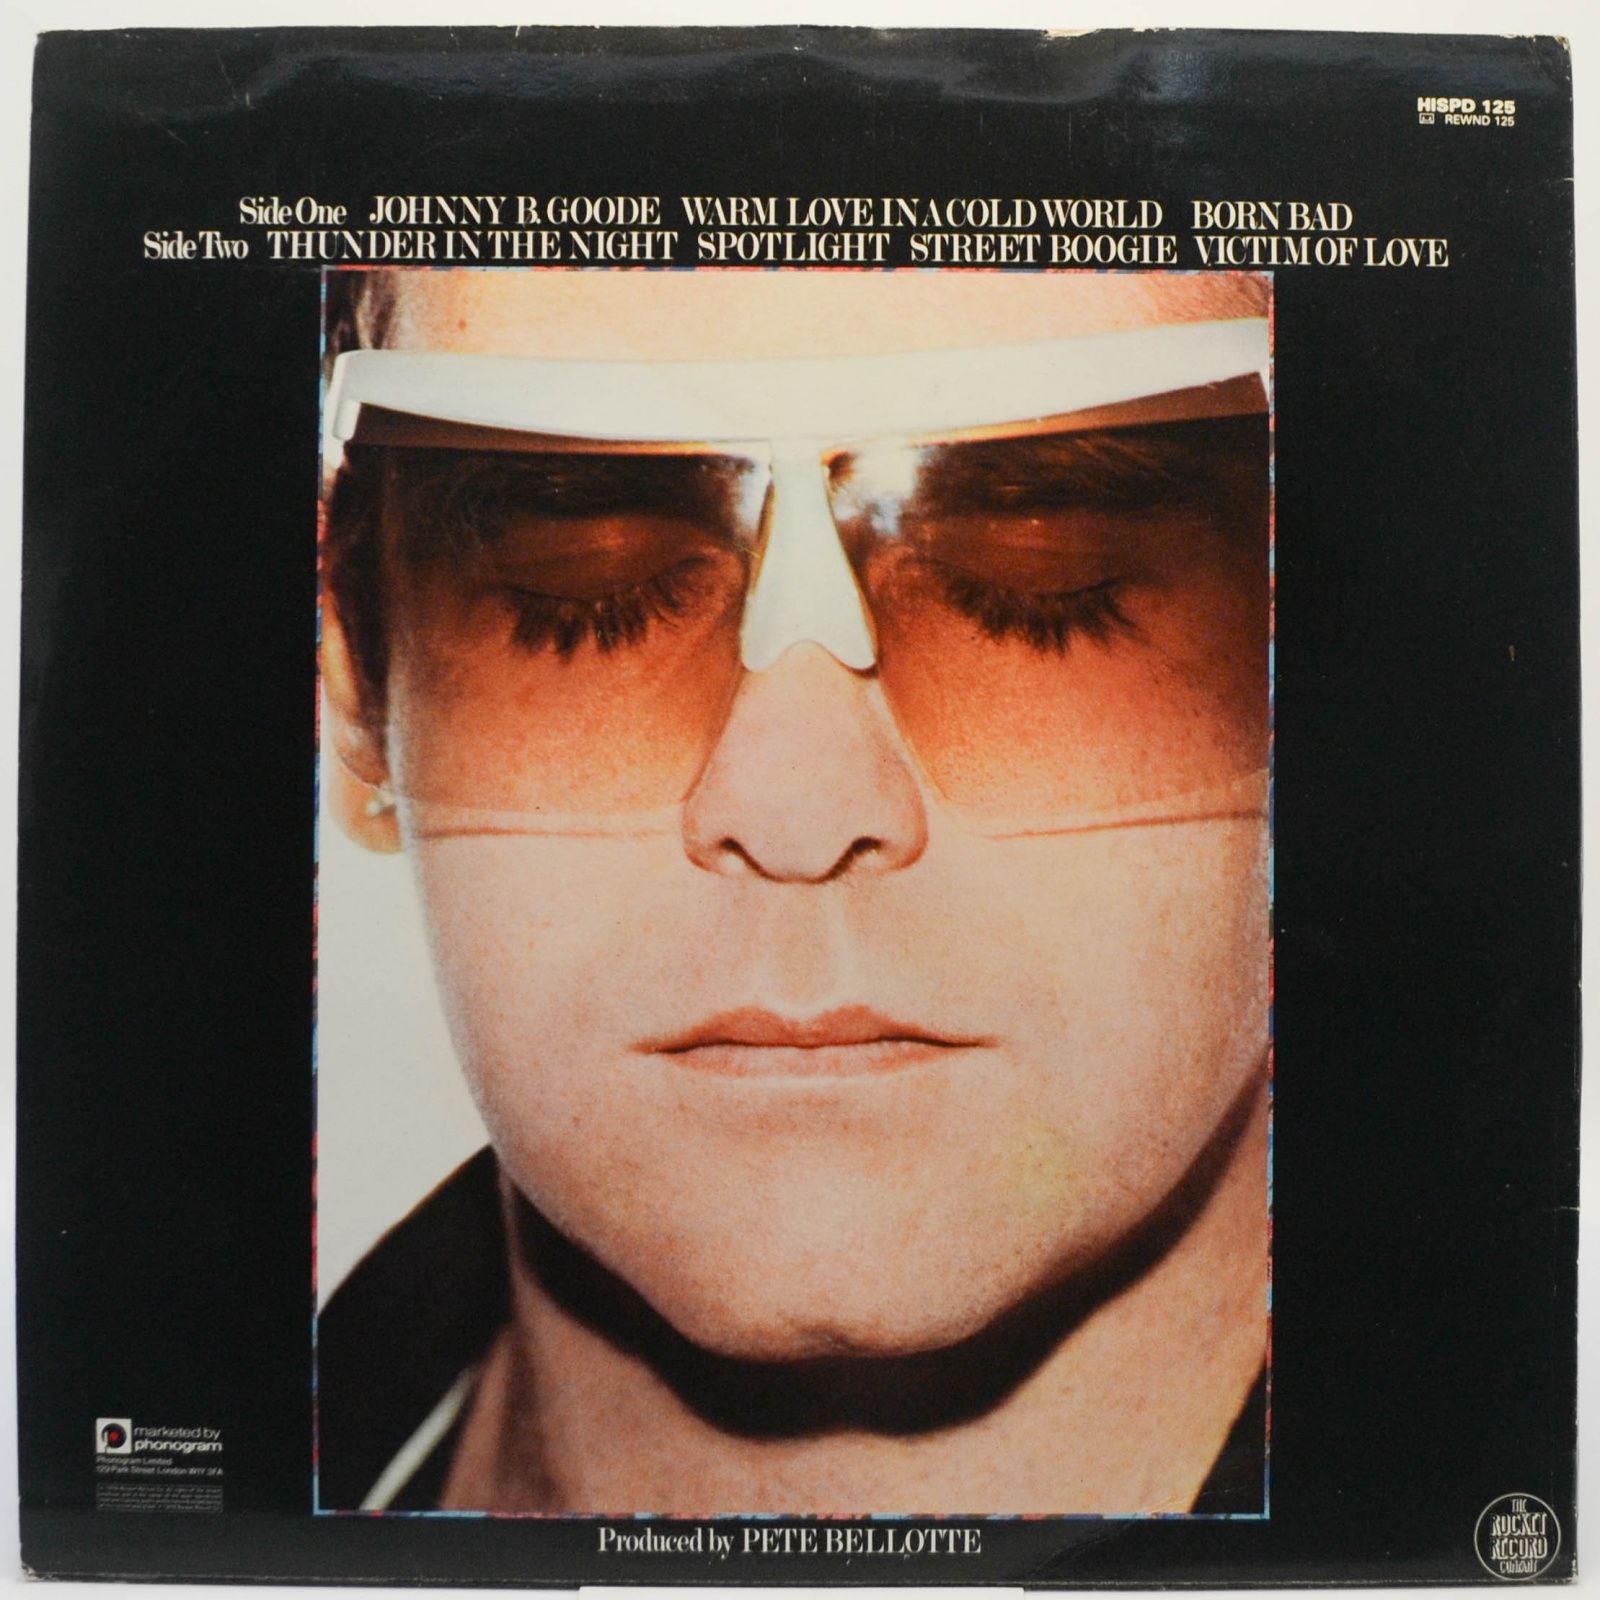 Elton John — Victim Of Love, 1979